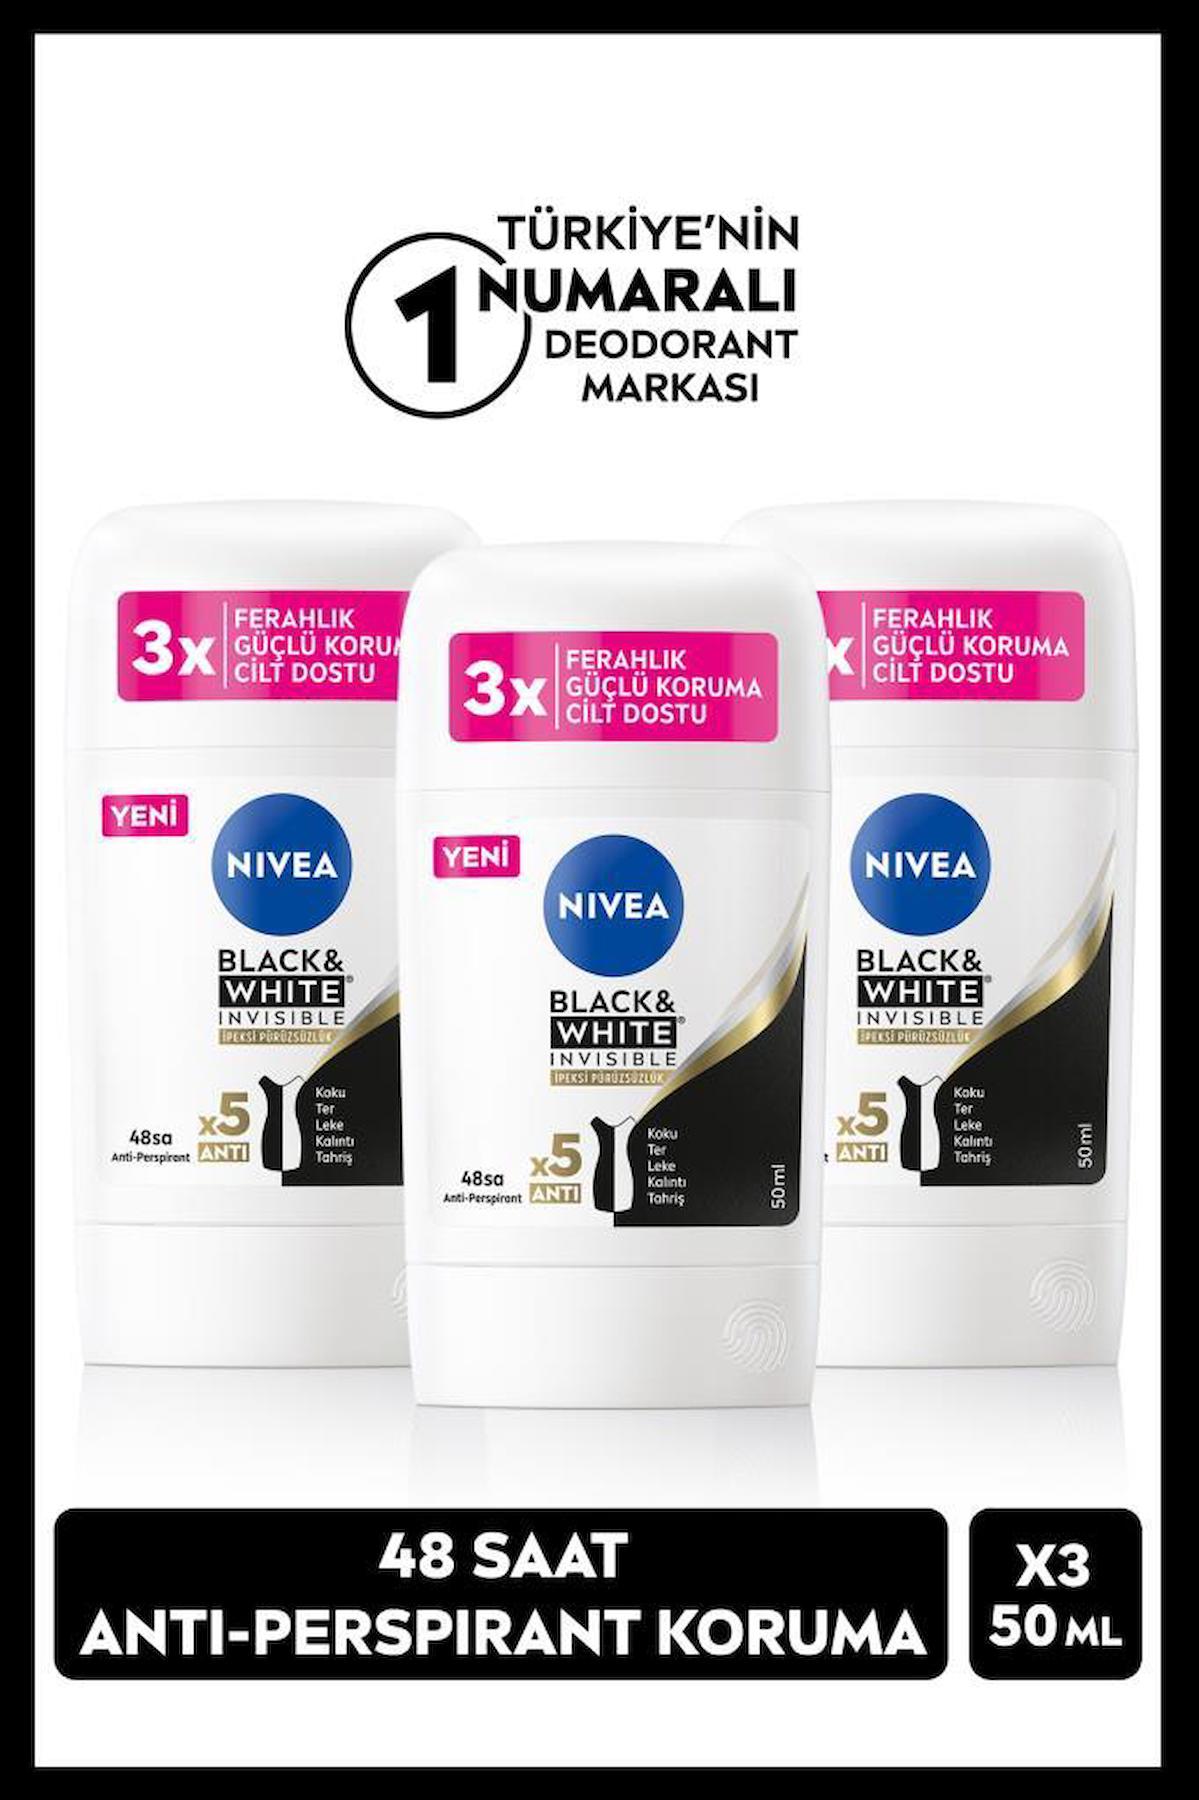 Nivea Black&White Invisible İpeksi Pürüzsüzlük Stick Kadın Deodorant 3x50 ml